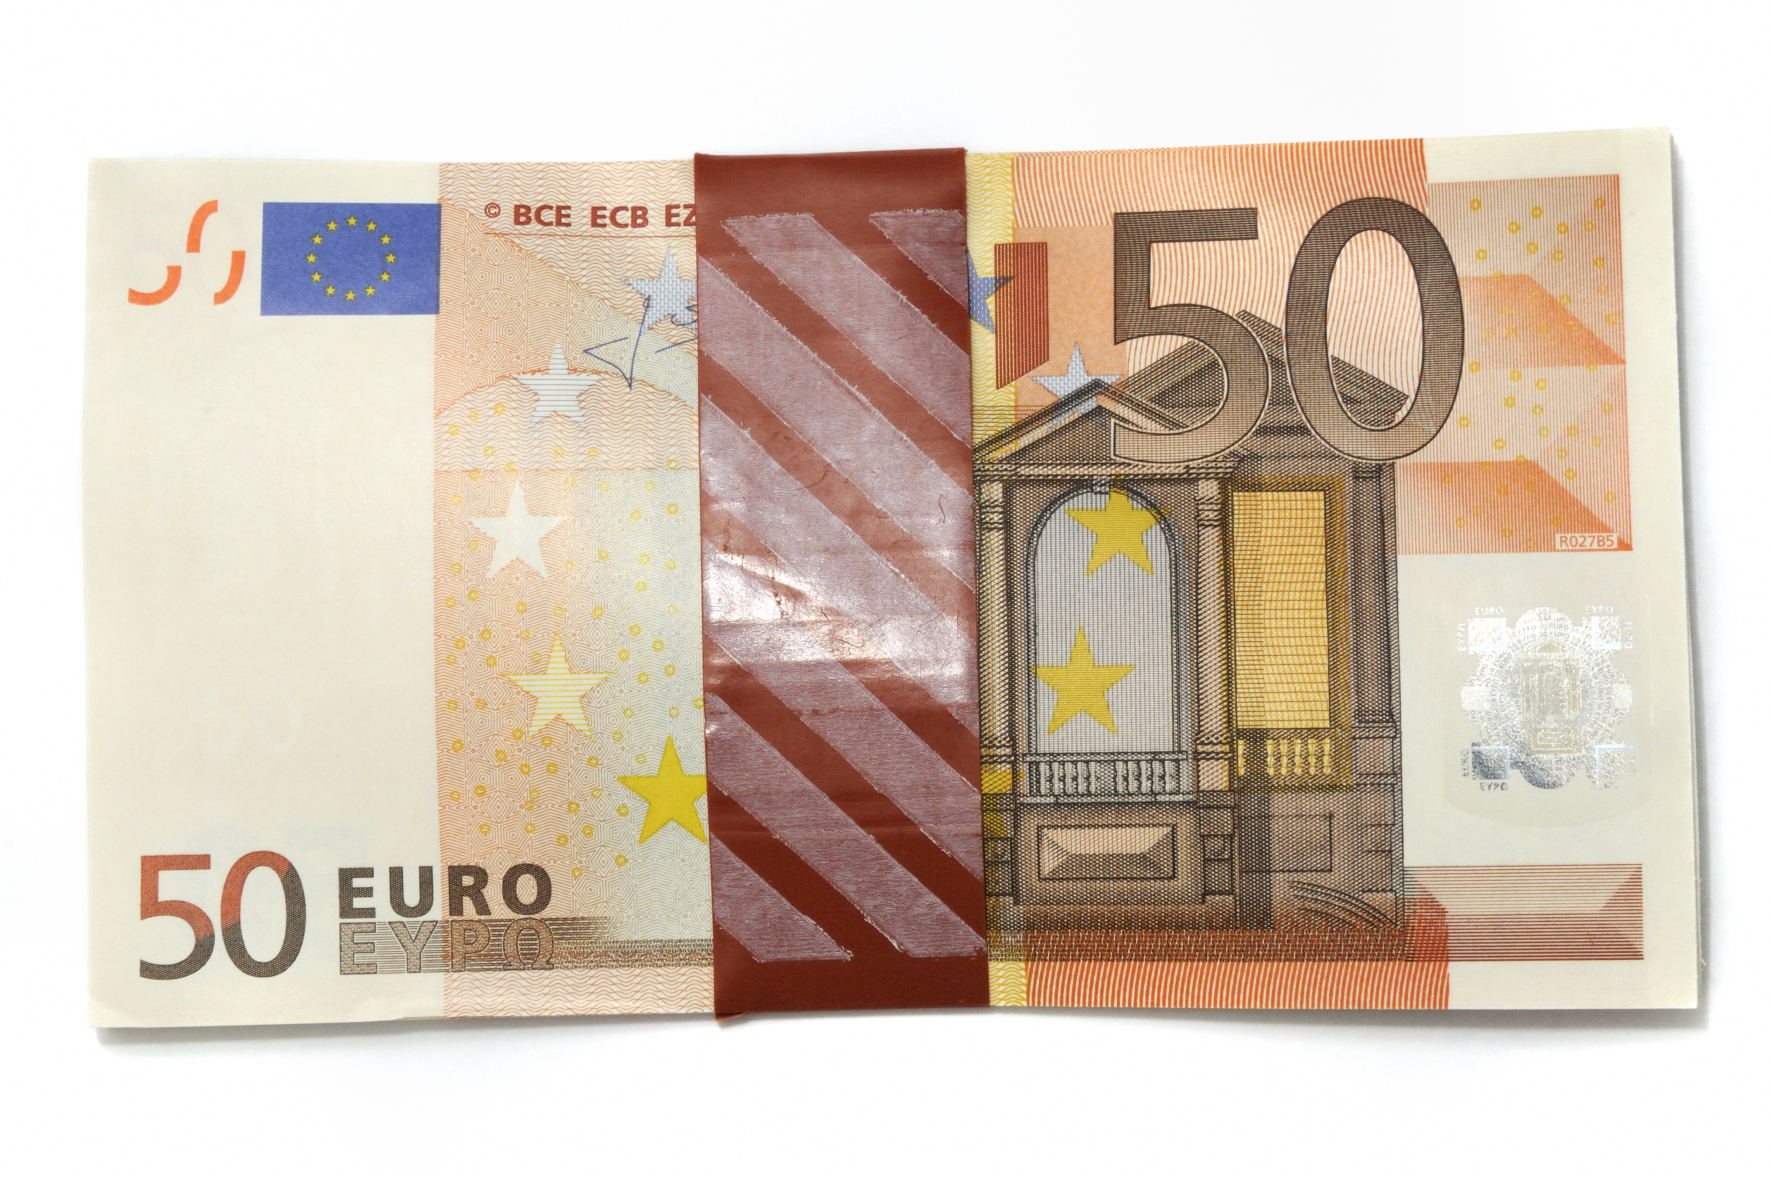 50 Евро старого образца. 50 Евро фото. 50 Евро фото 2002.